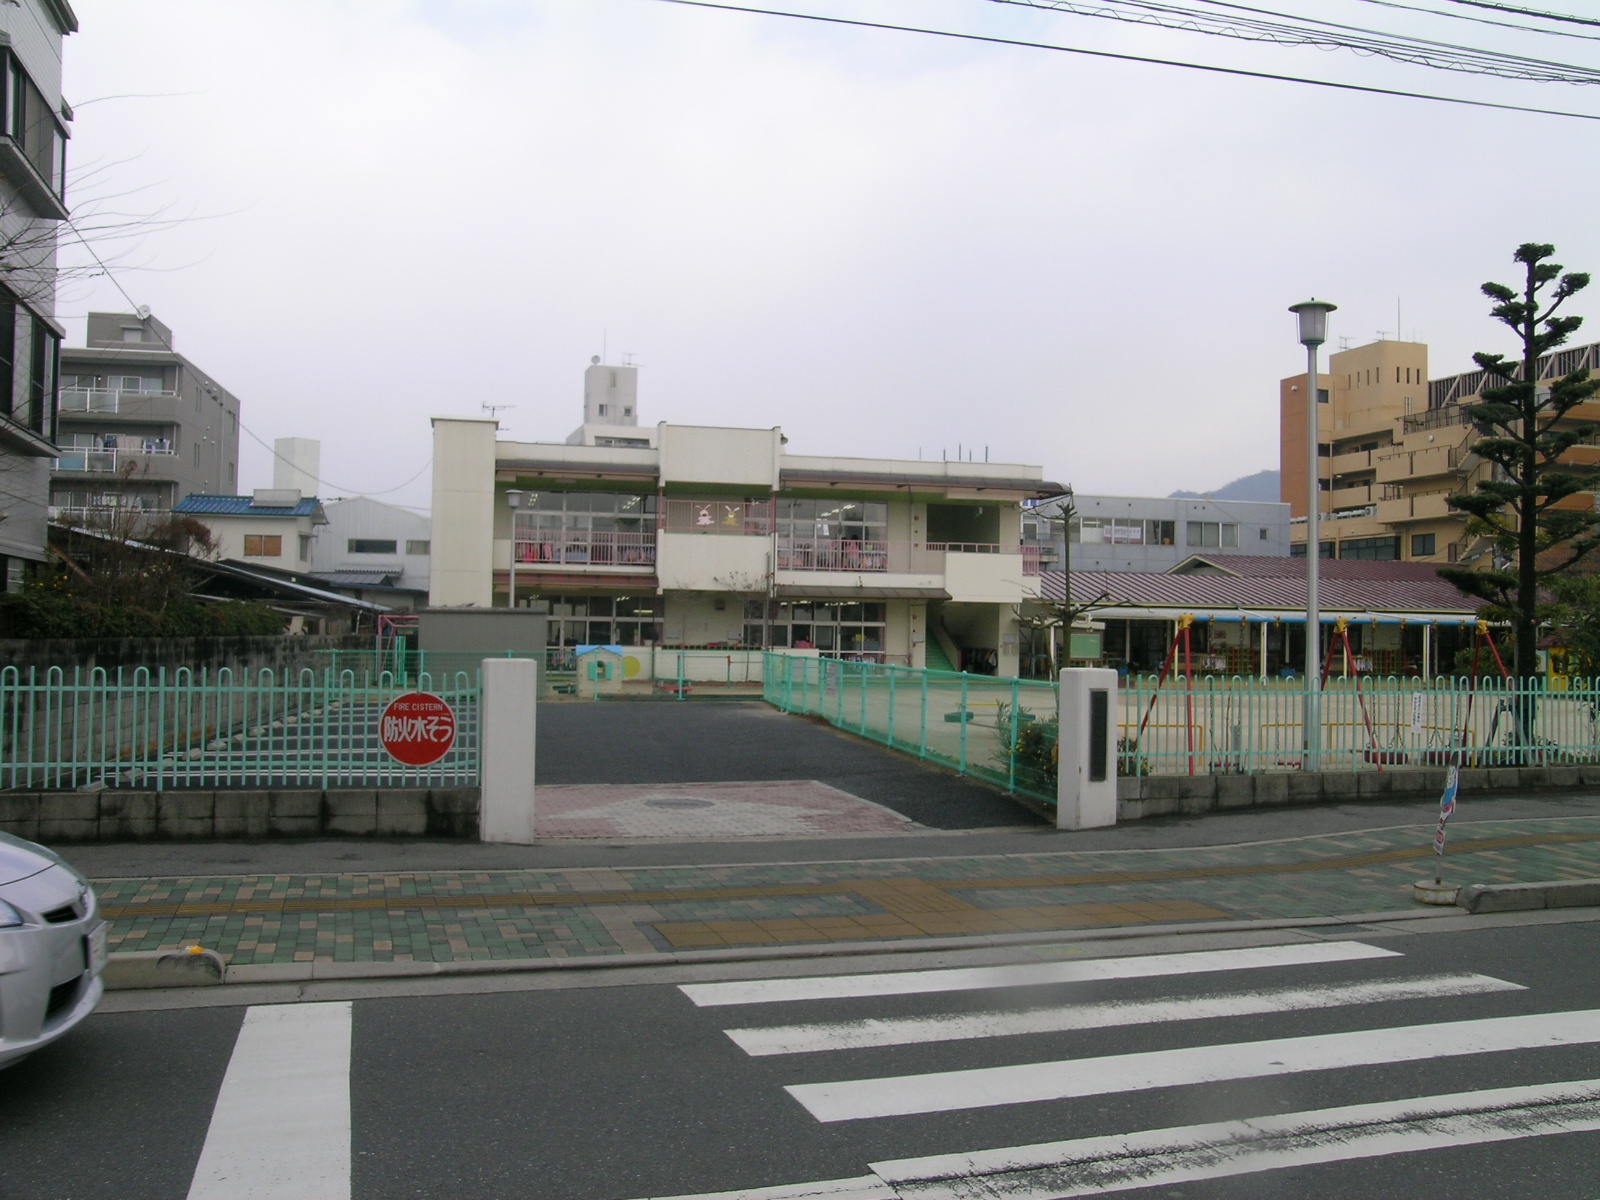 kindergarten ・ Nursery. Suzuho Gardens nursery school (kindergarten ・ 375m to the nursery)